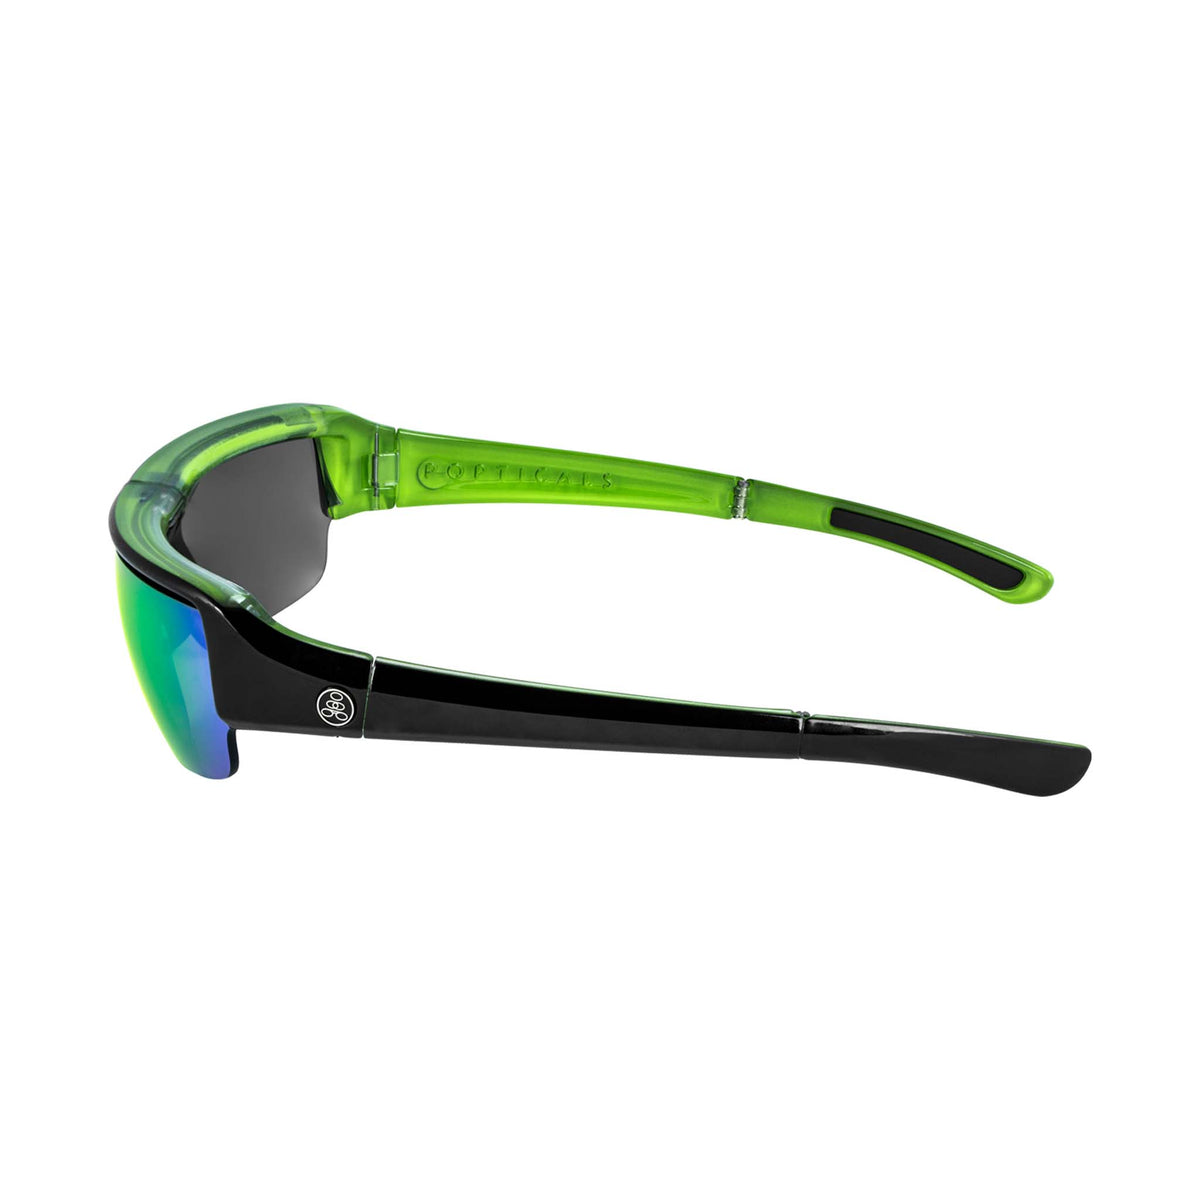 Popticals, Premium Compact Sunglasses, PopGun, 040010-GLEN, Polarized Sunglasses, Gloss Black over Green Crystal Frame, Gray Lenses w/Green Mirror Finish, Side View